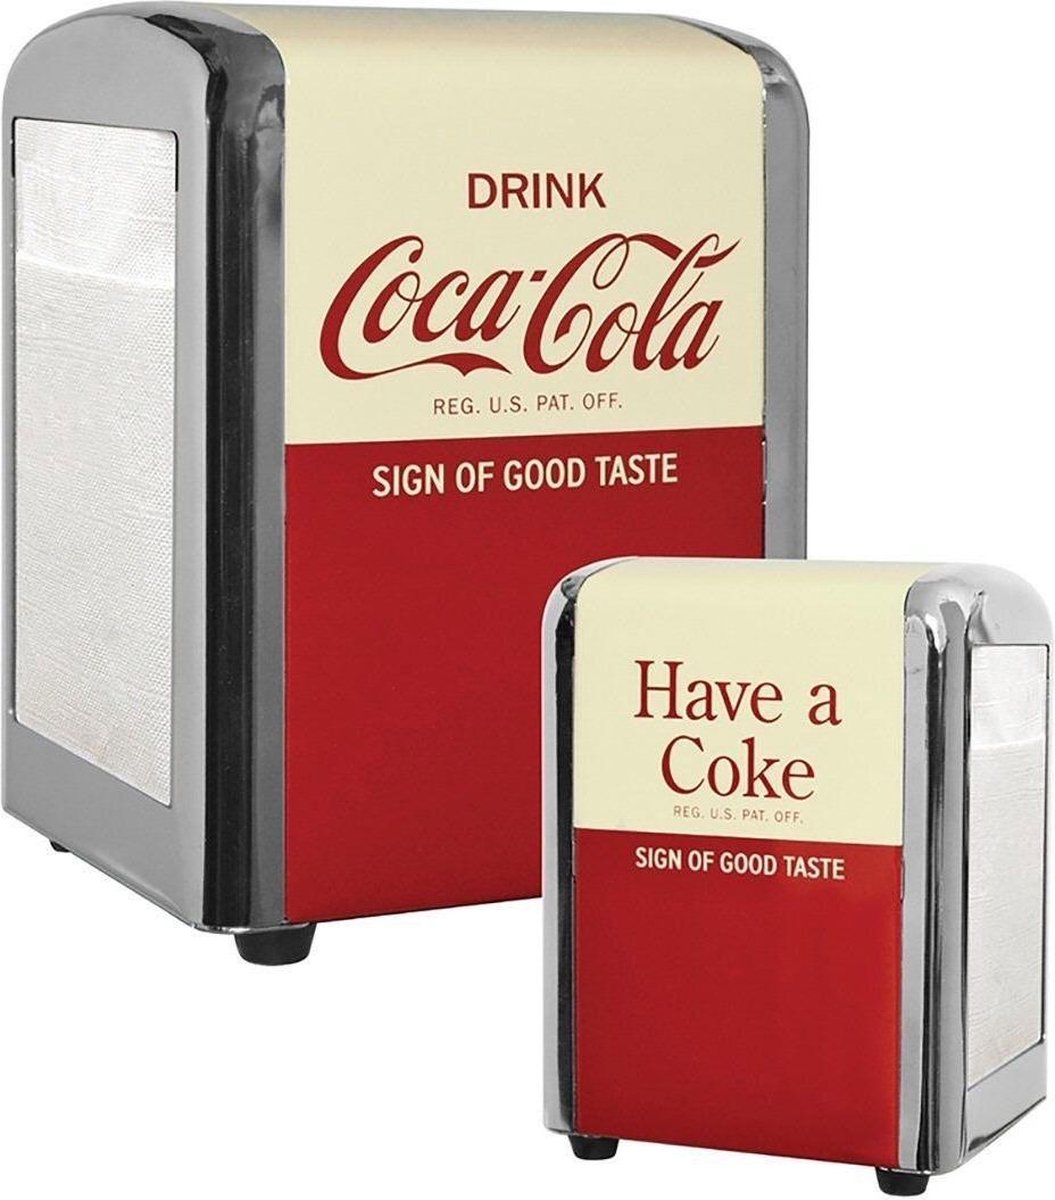 Porte-serviettes Coca-Cola demi-format signe de bon goût | bol.com